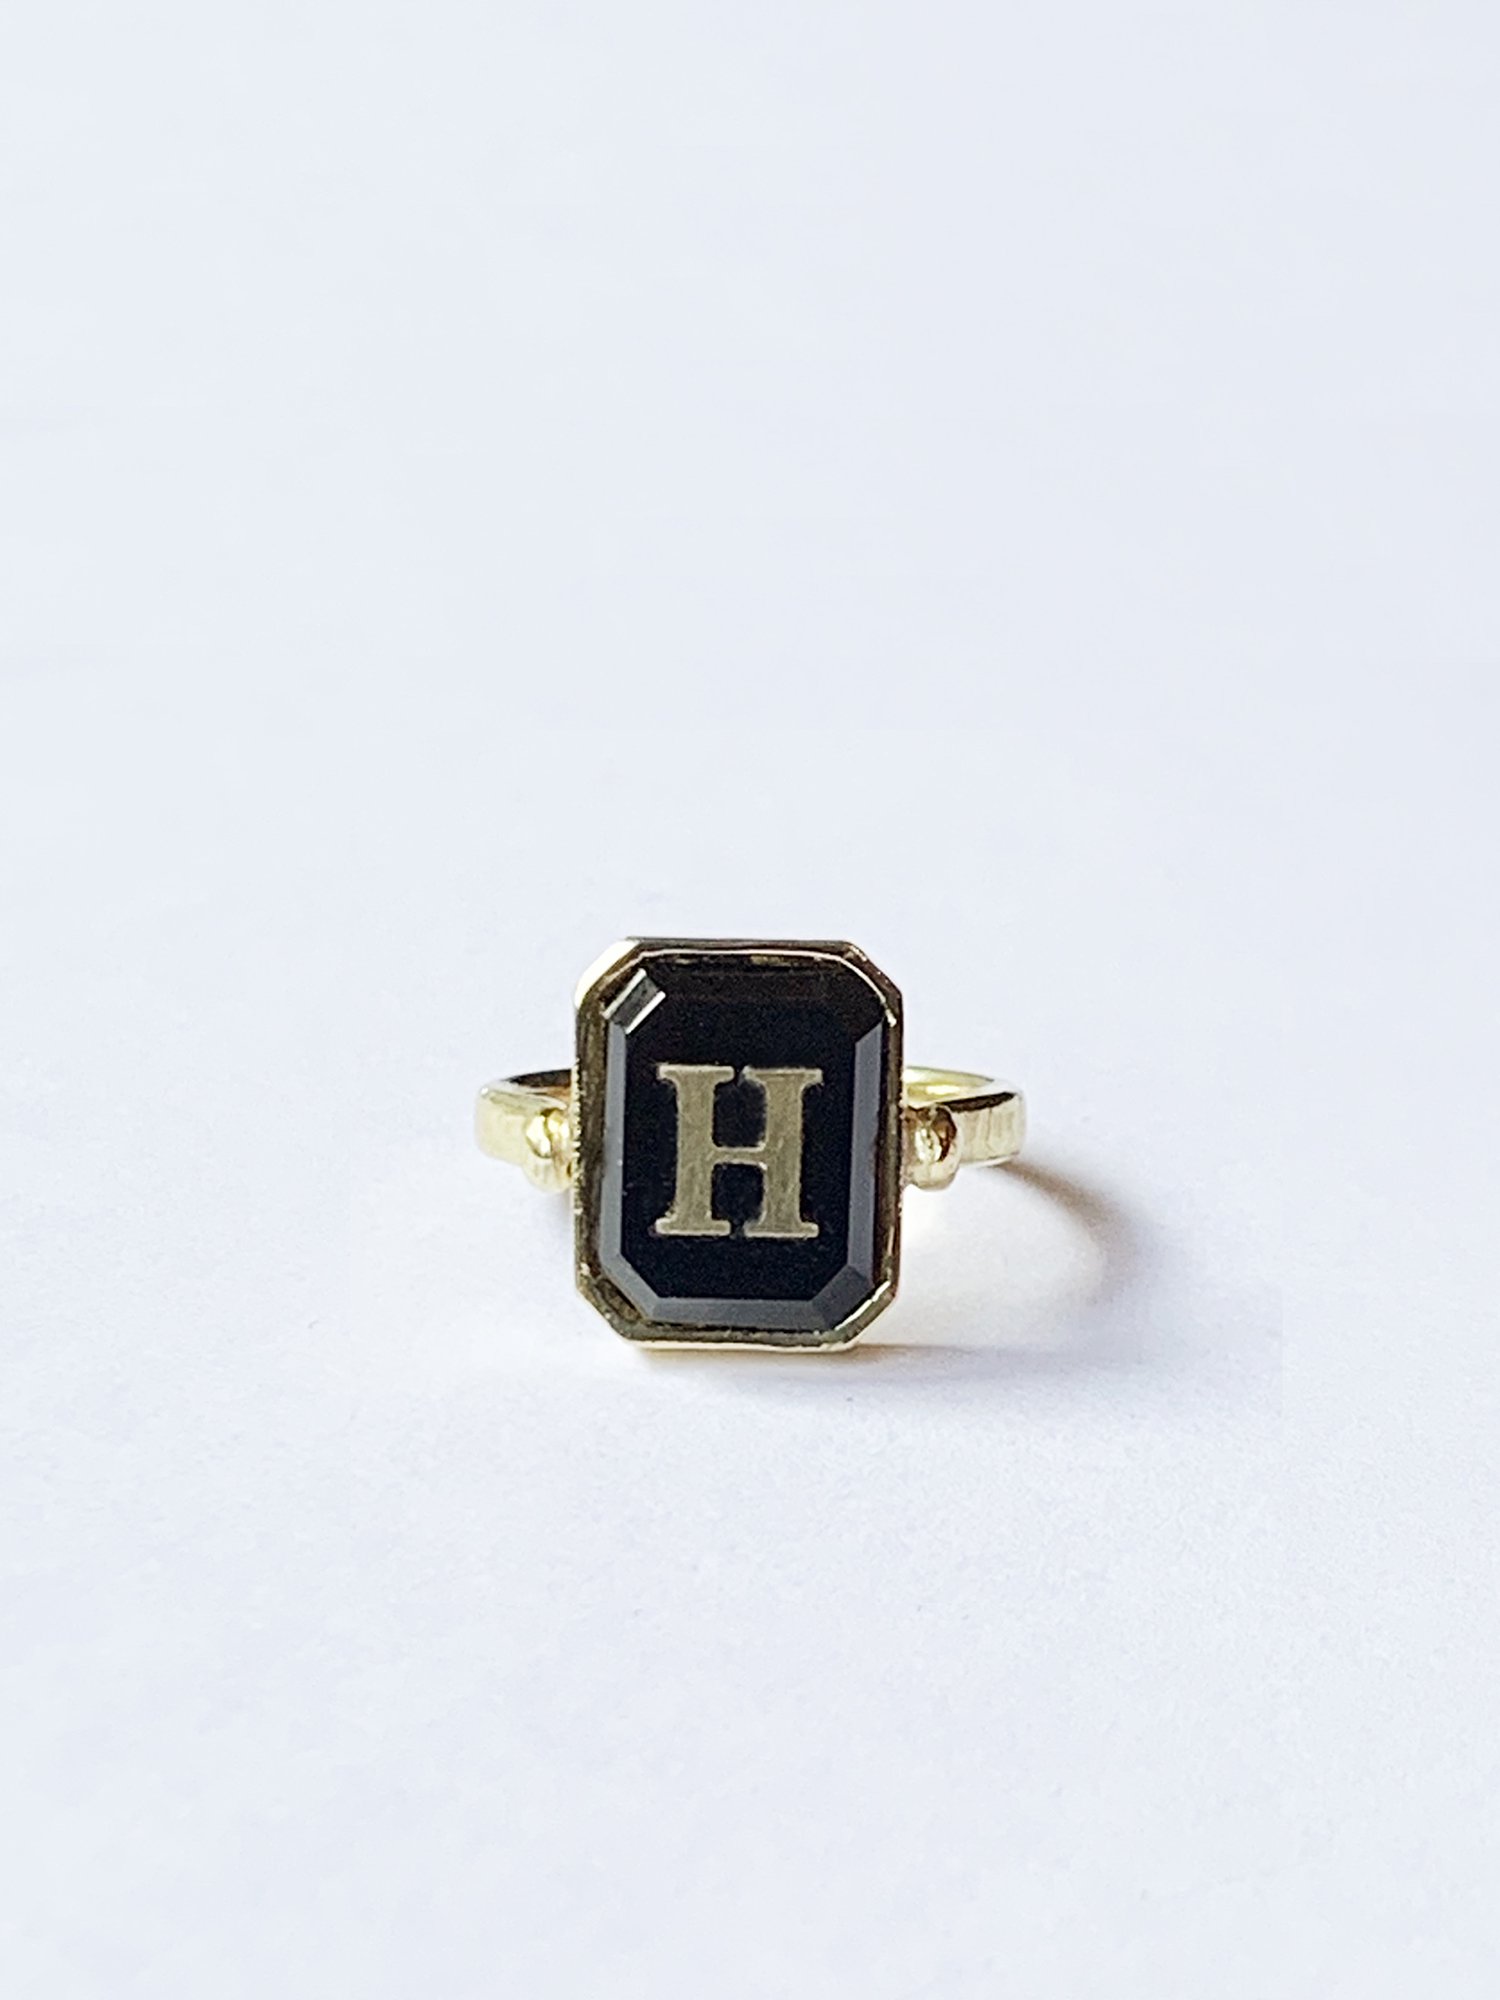 HELIOS / Initial onyx ring
